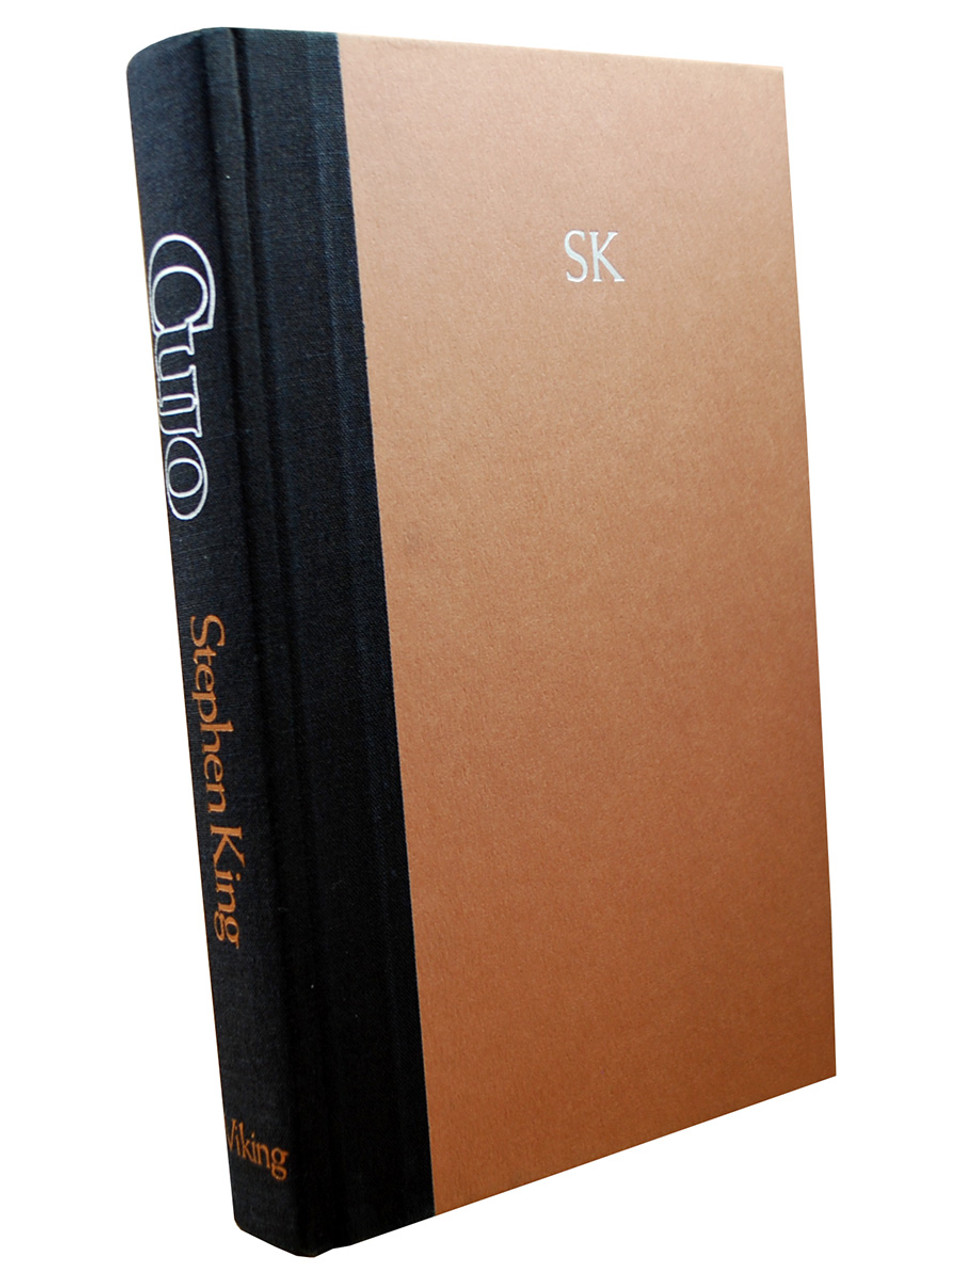 Viking Press 1981, Stephen King "Cujo" dj/HC First Edition, First Printing Slipcased